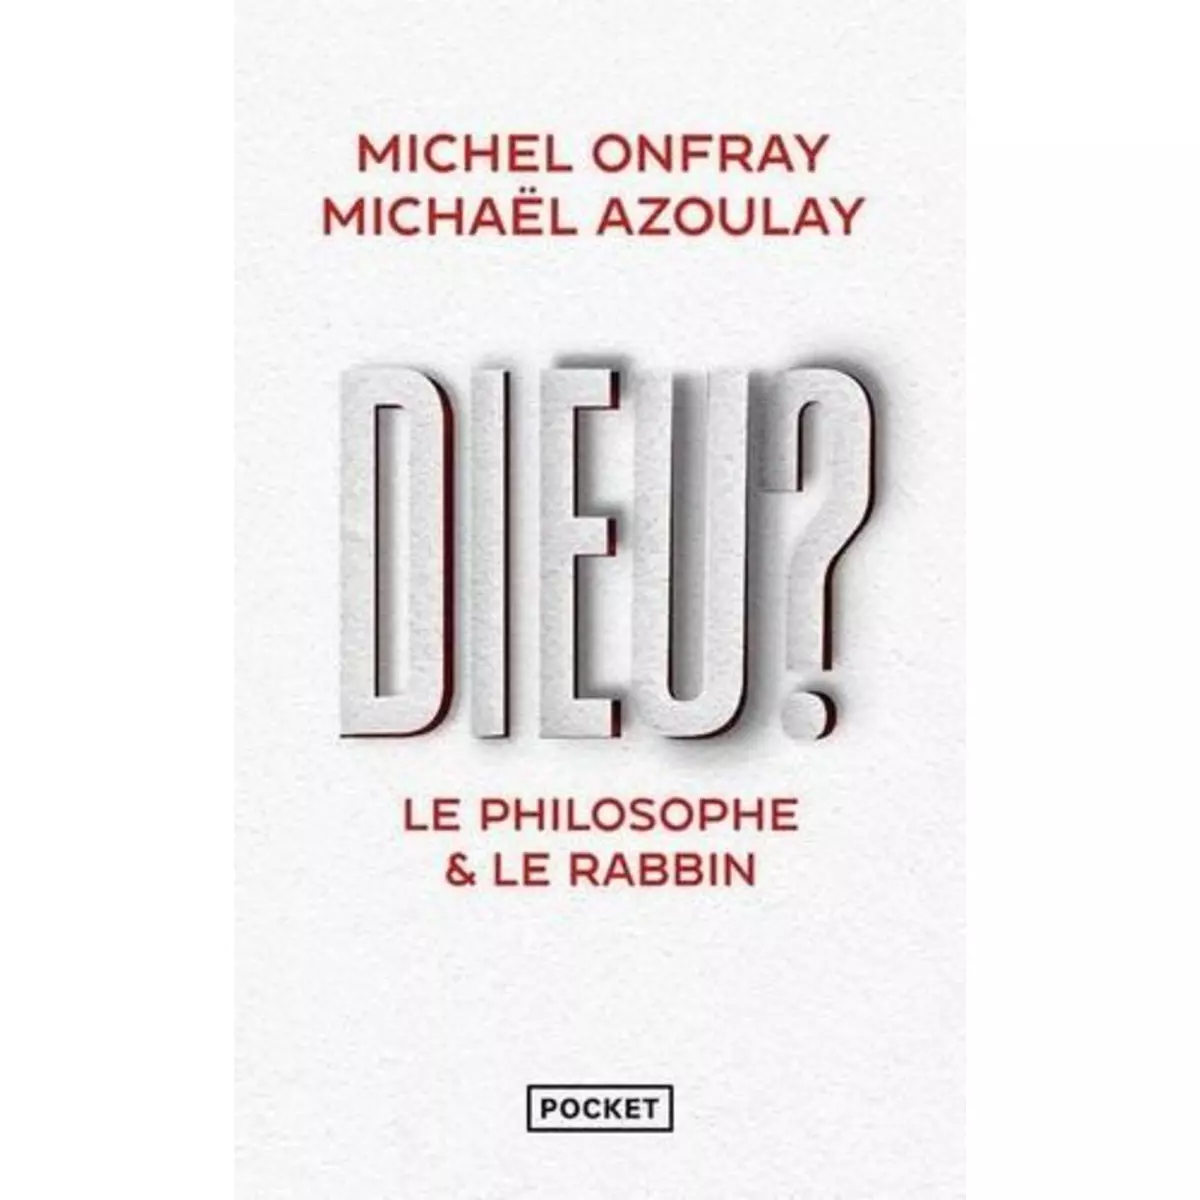  DIEU ? LE PHILOSOPHE & LE RABBIN, Onfray Michel